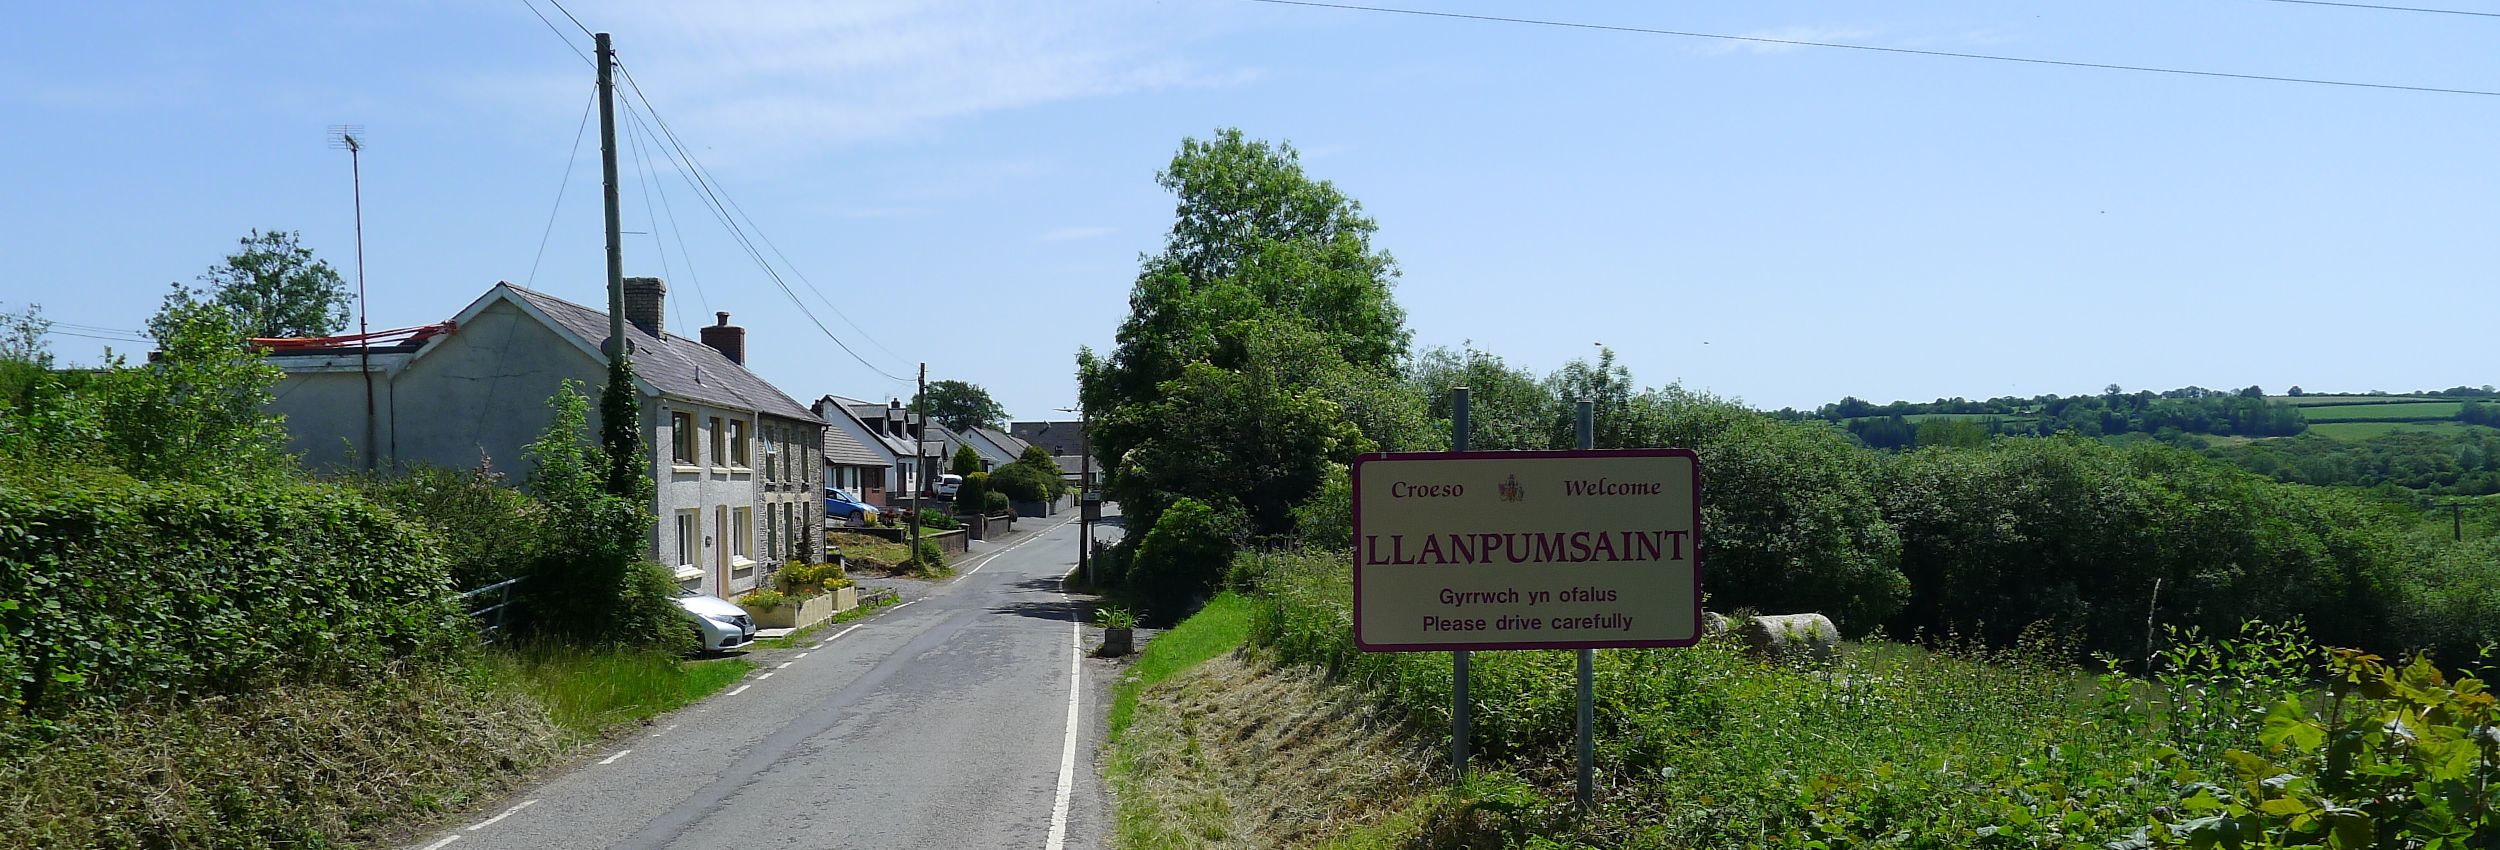 Llanpumsaint-Banners-2019-10